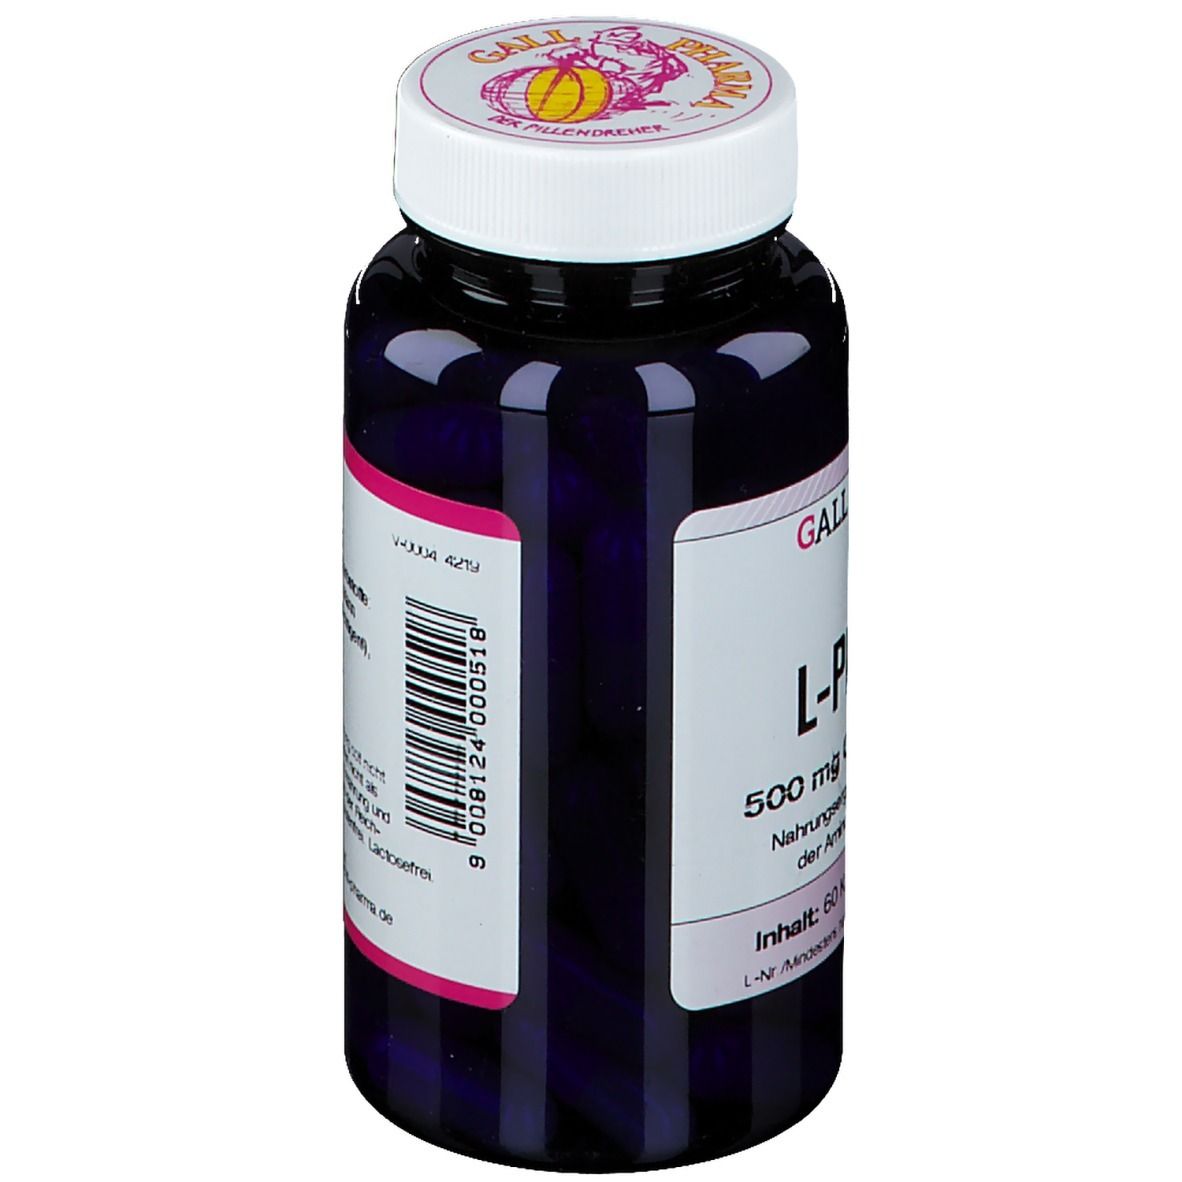 GALL PHARMA L-Prolin 500 mg GPH Kapseln